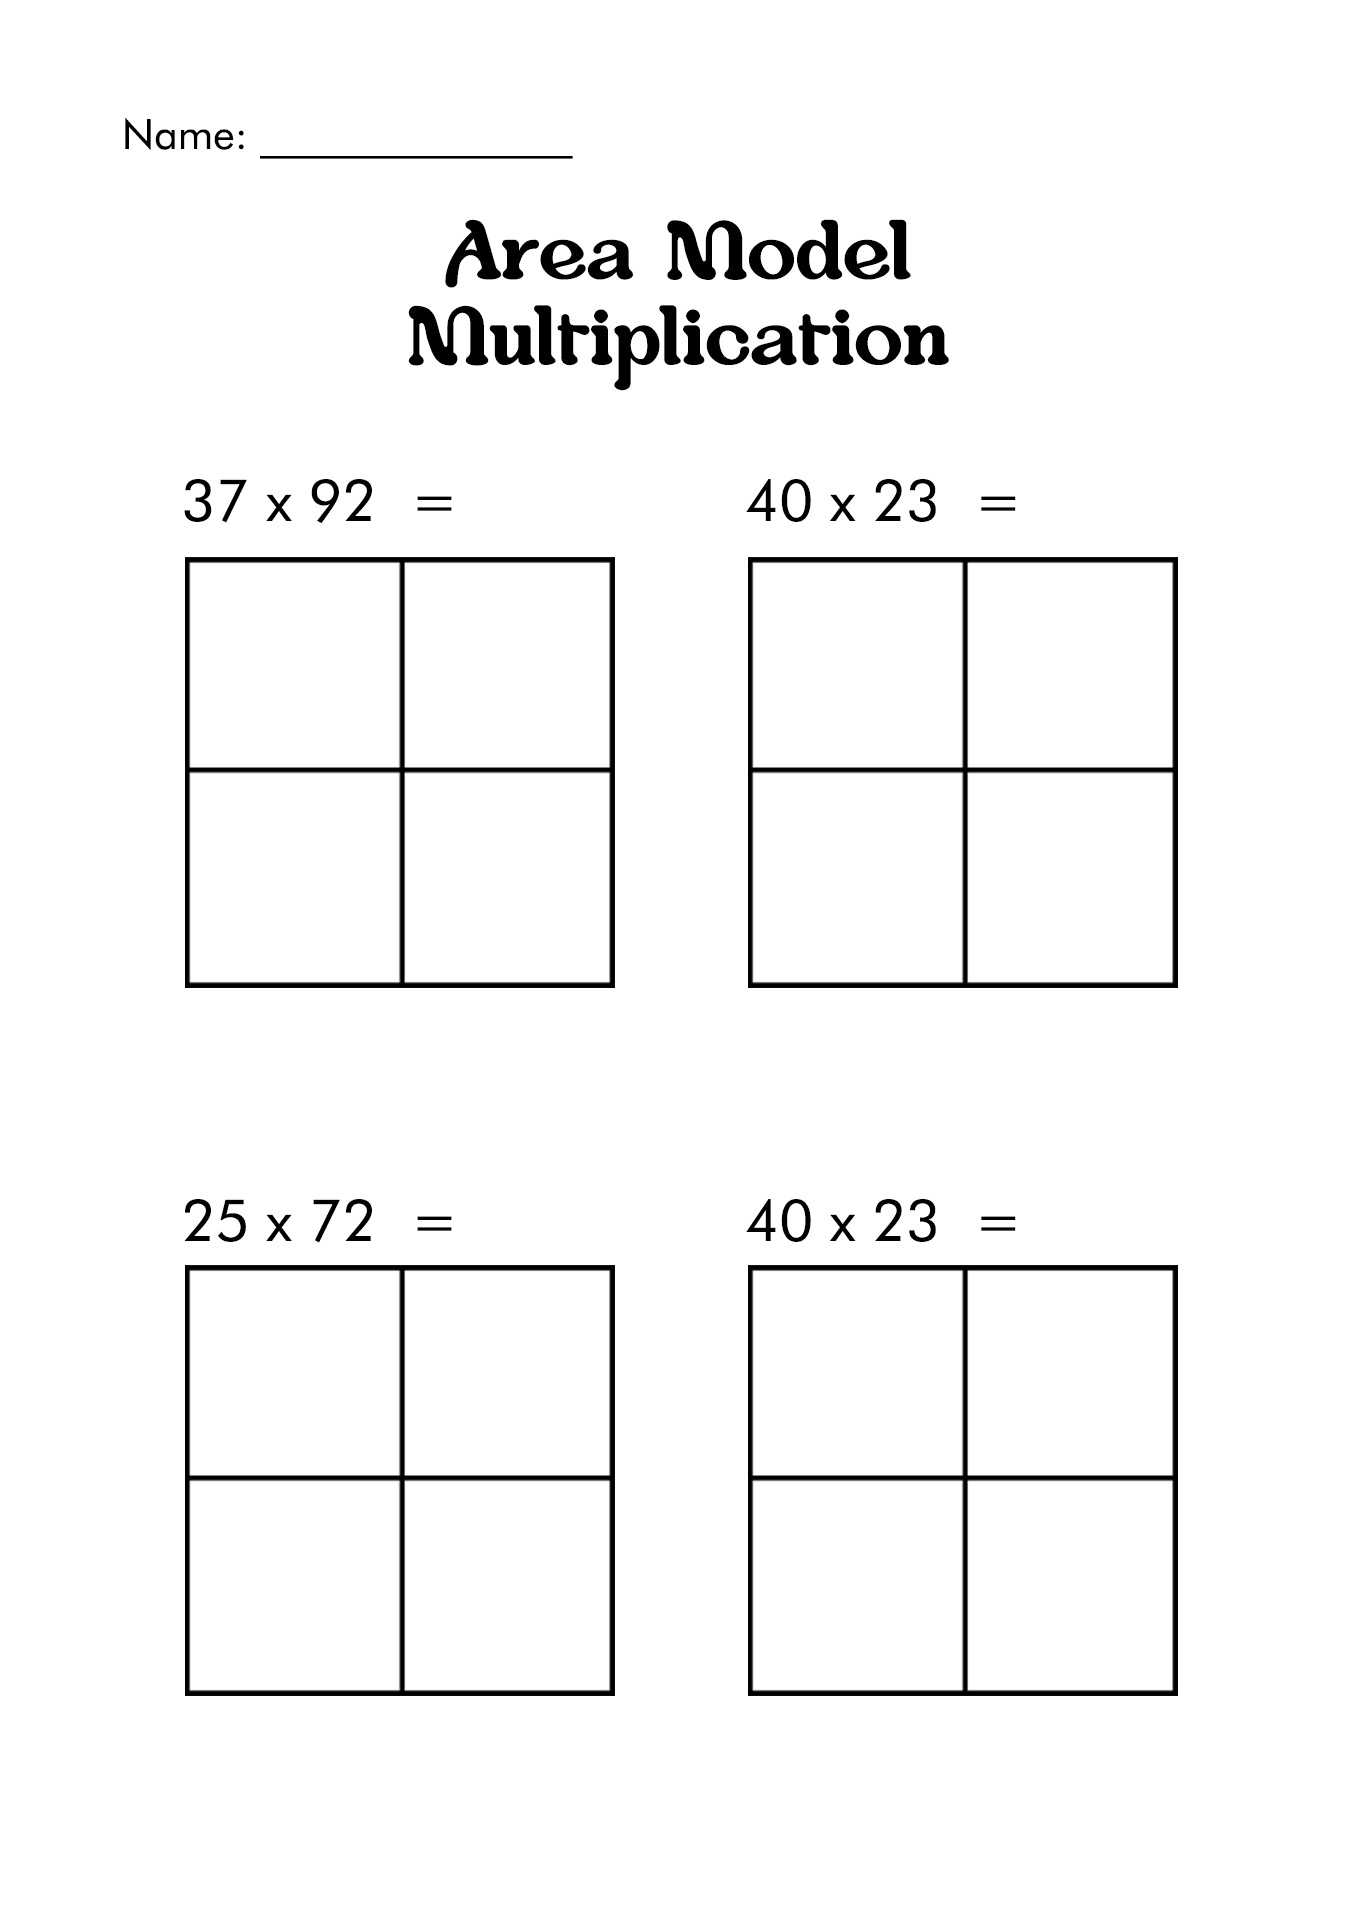 area-model-multiplication-decimals-multiplying-decimals-using-an-area-model-in-2020-you